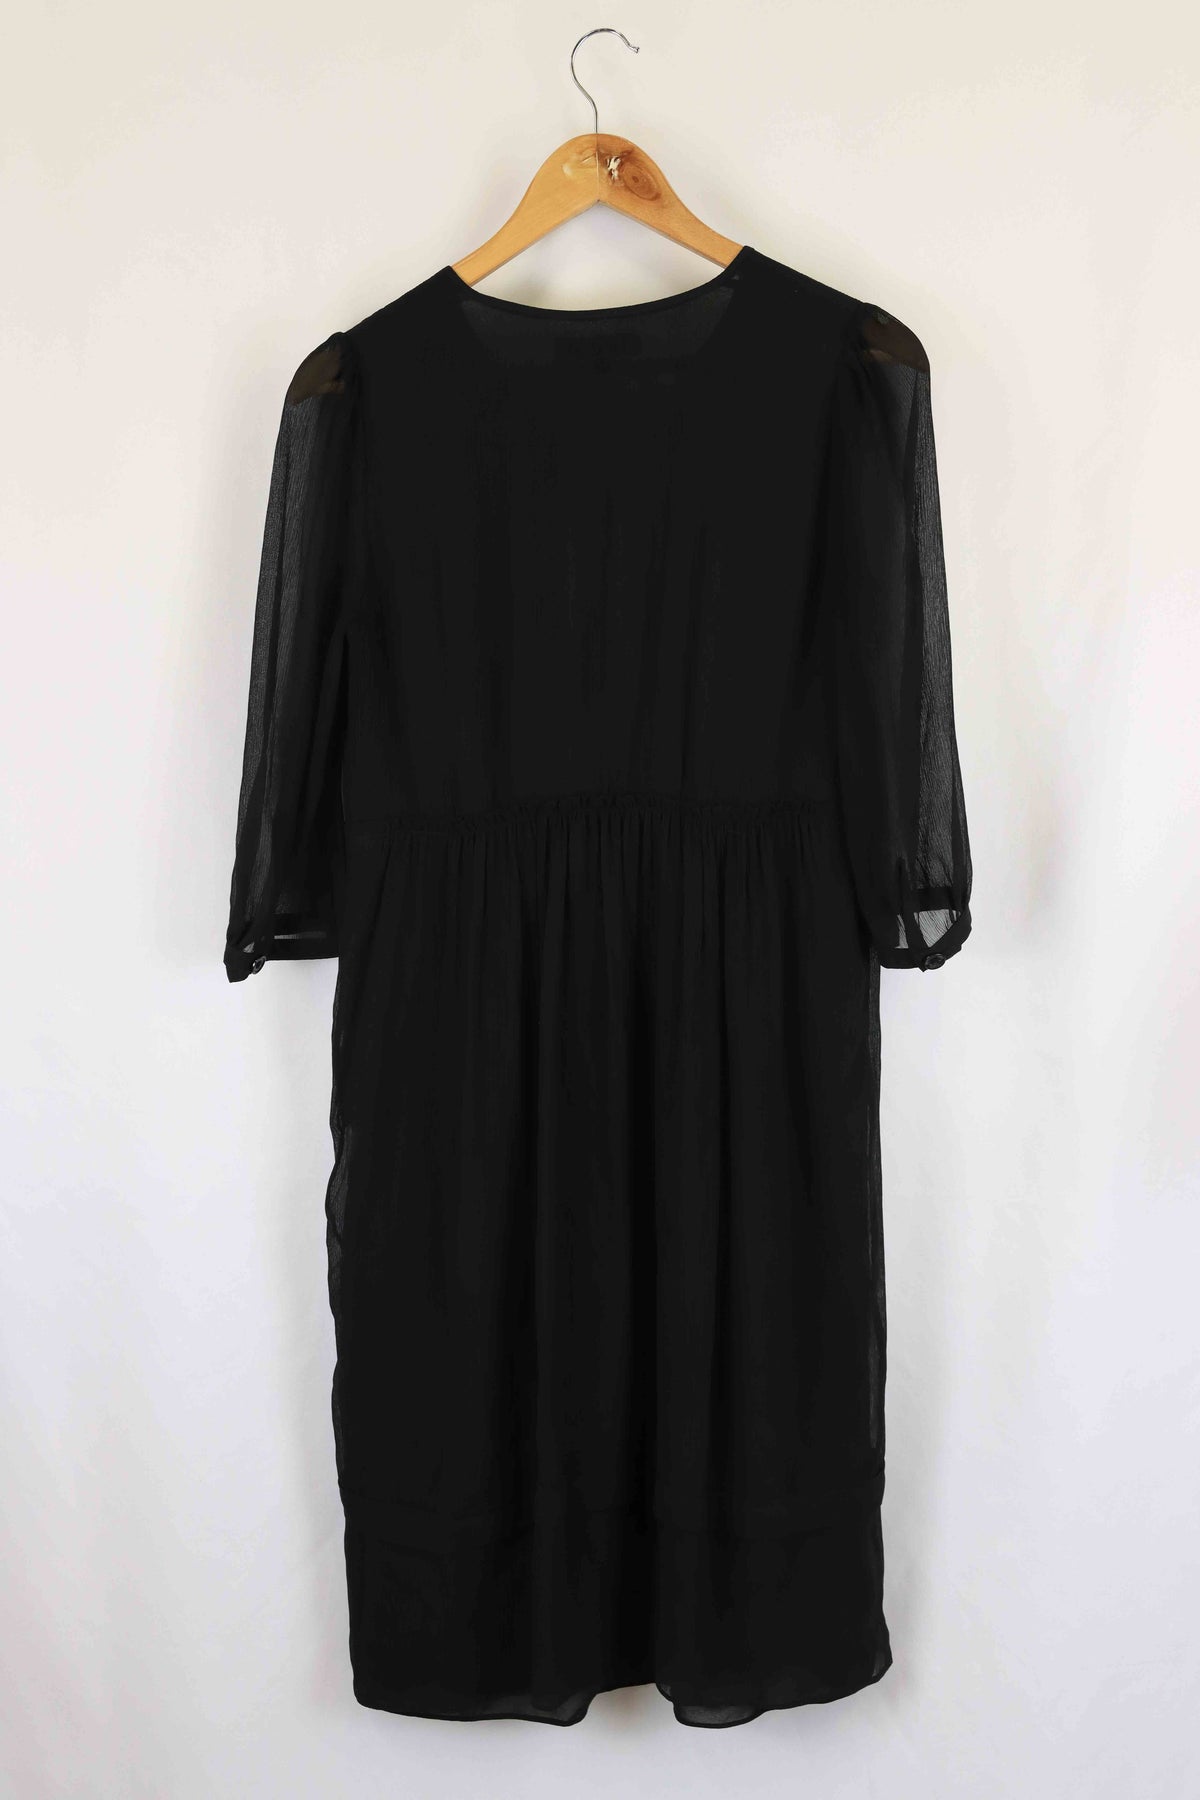 Burberry Black Dress 8